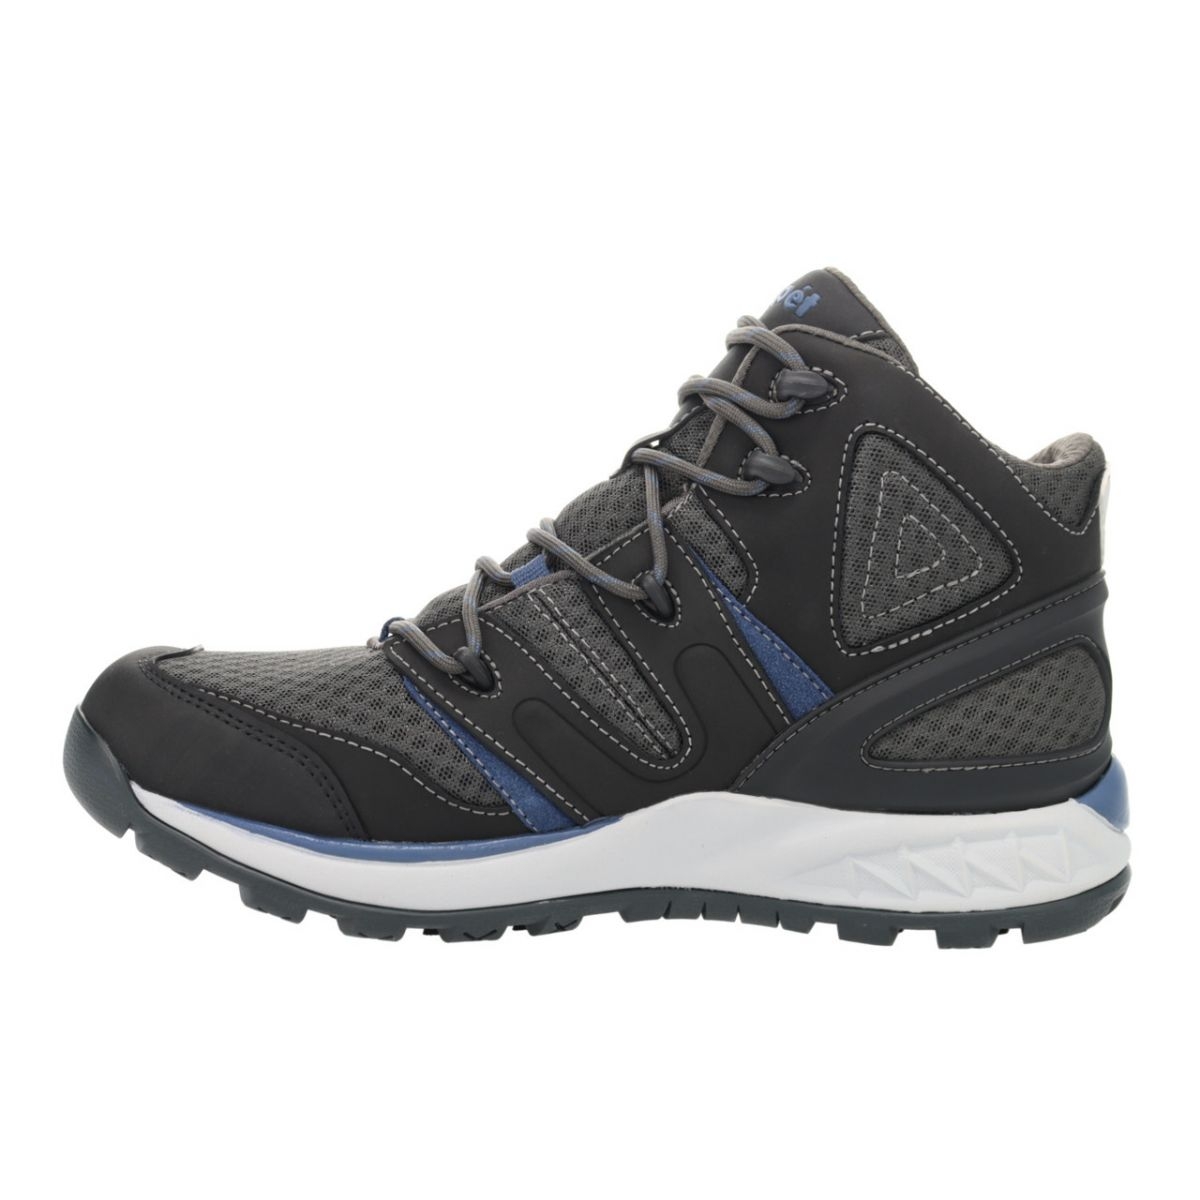 Propet Men's Veymont Waterproof Hiking Boot Grey/Blue - MOA022SGRB GREY/BLUE - GREY/BLUE, 12